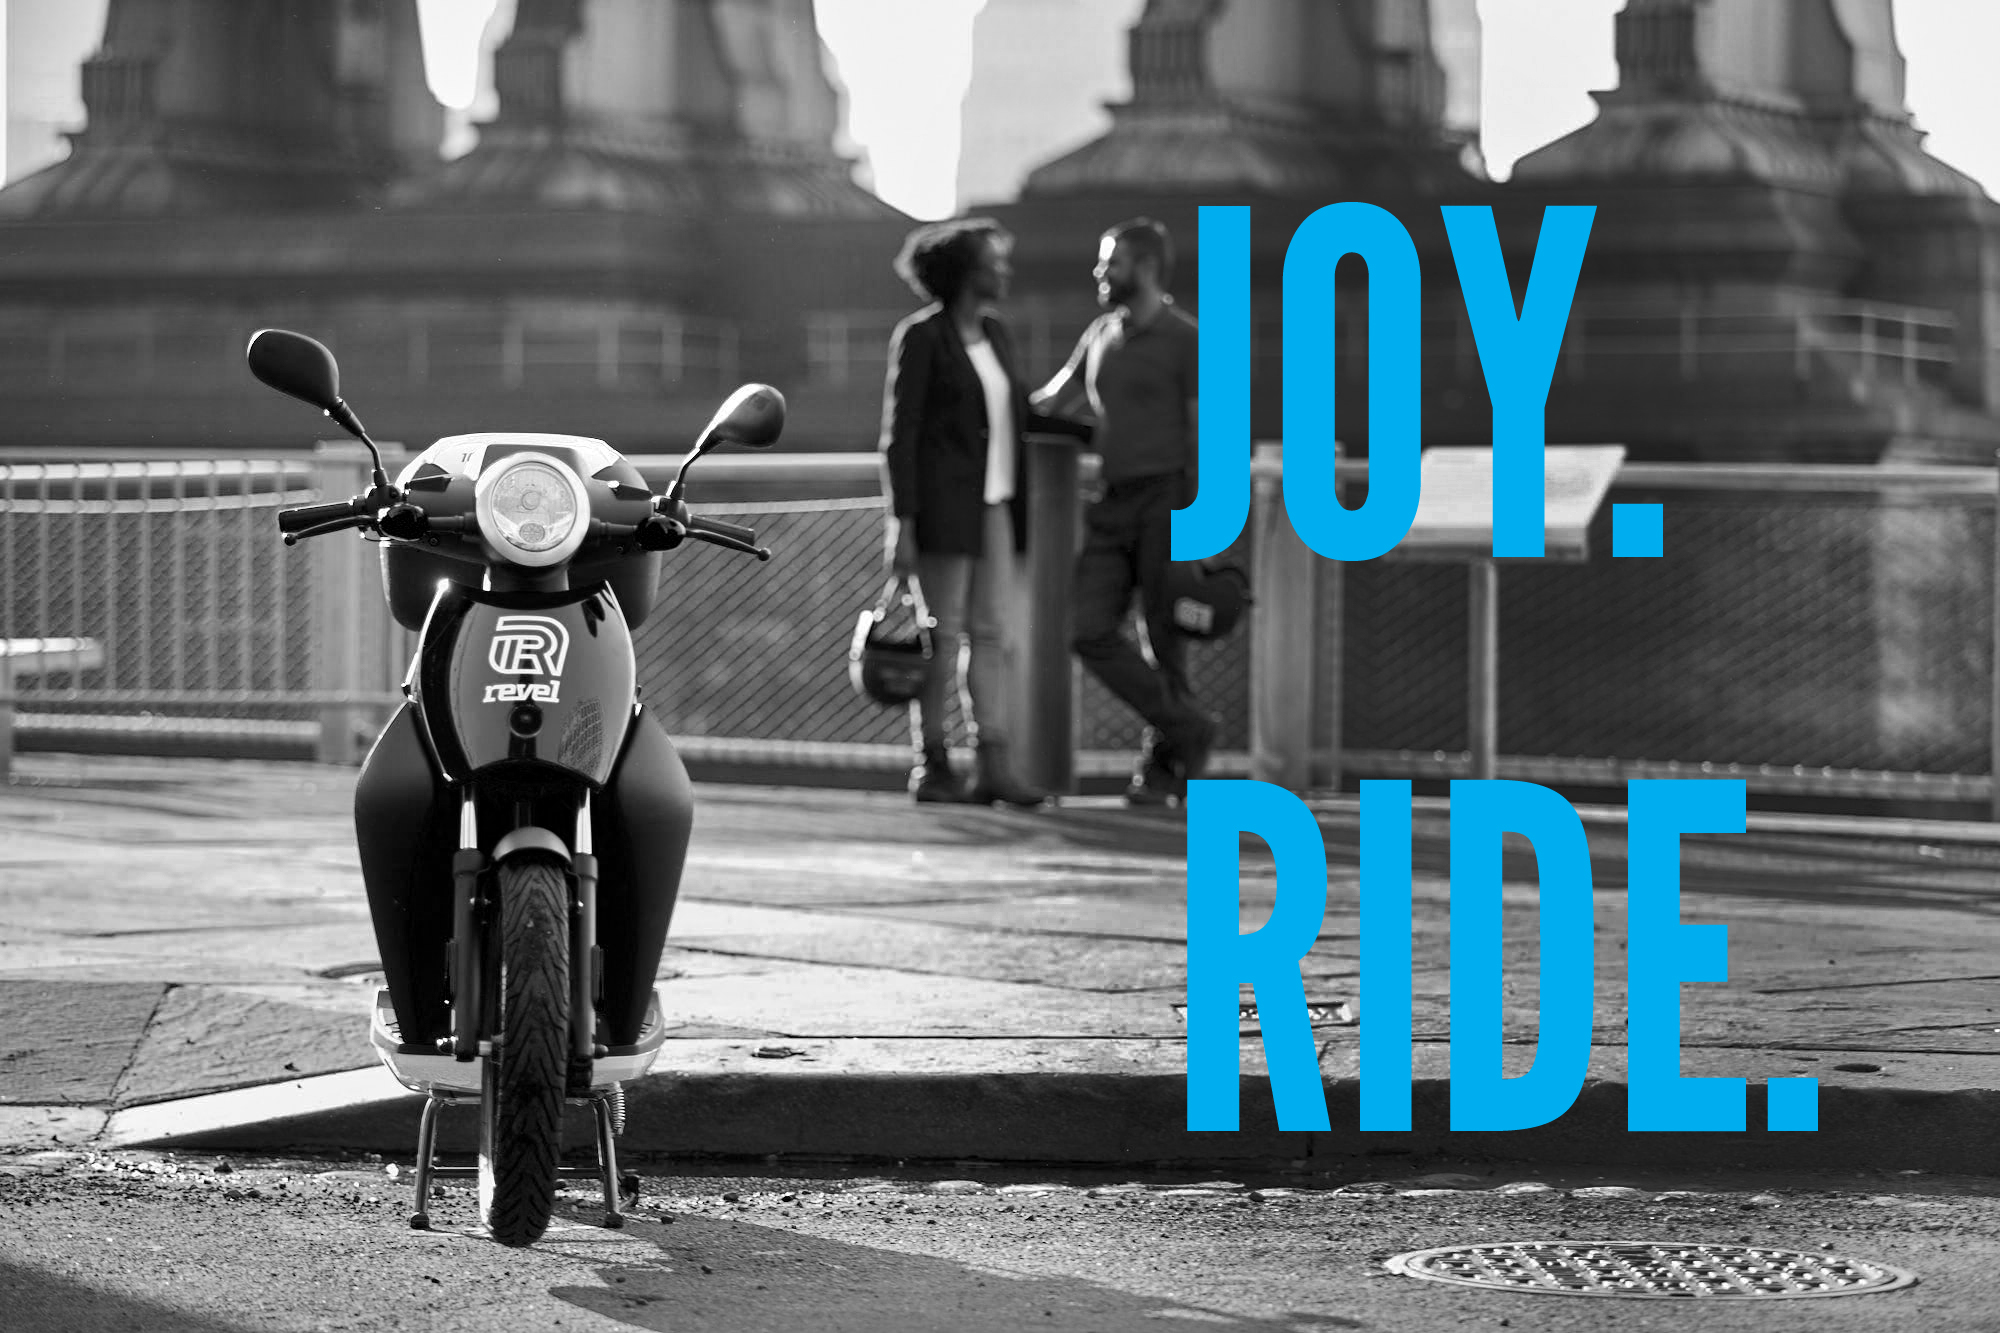 joy ride headline.jpg